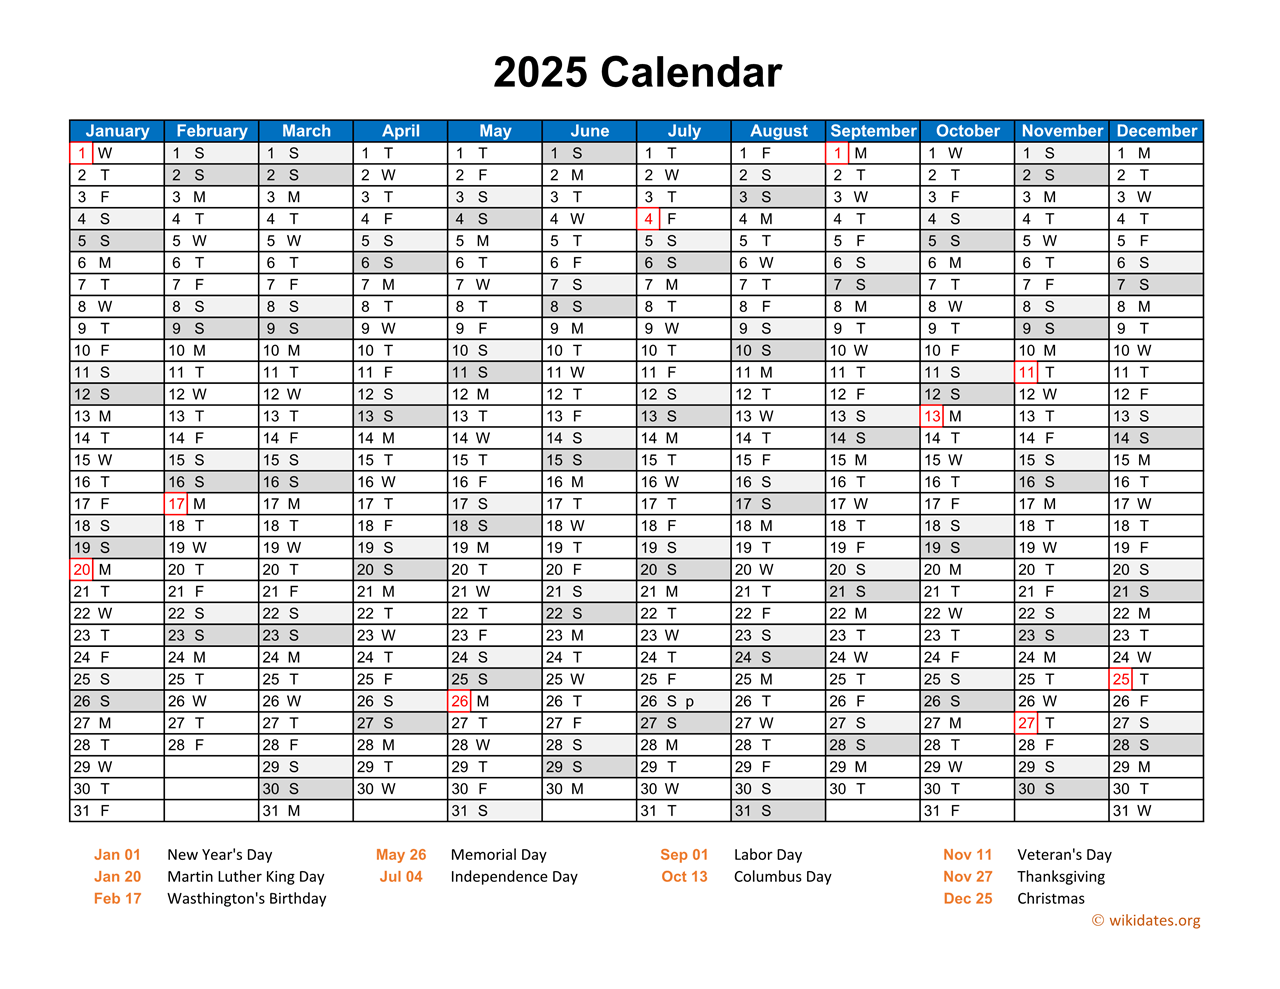 2025 Calendar Horizontal One Page WikiDates